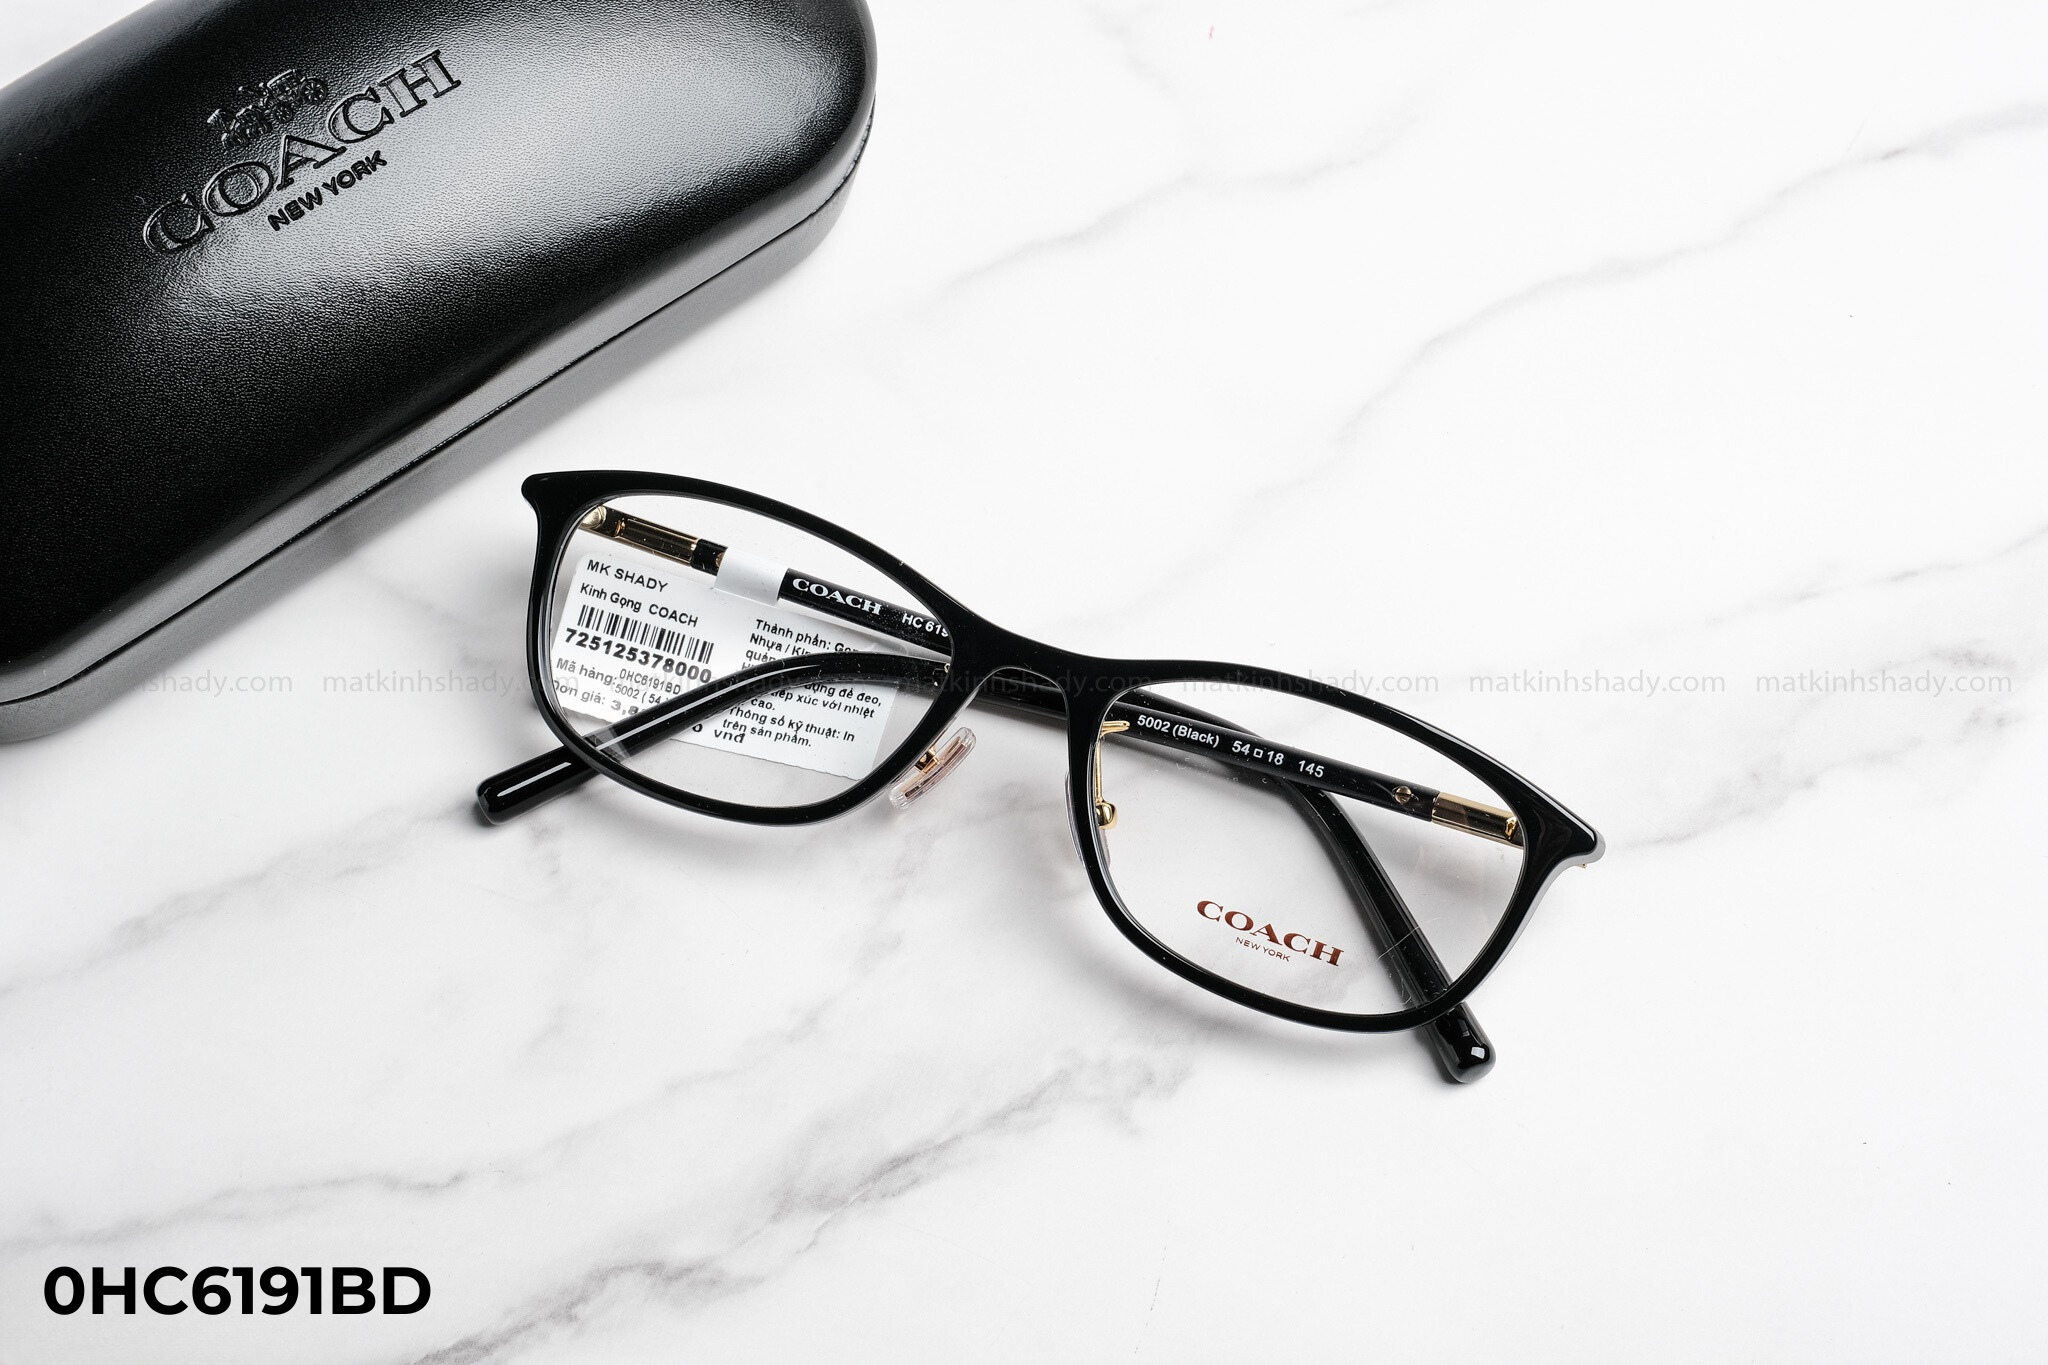  Coach Eyewear - Glasses -  0HC6191BD 